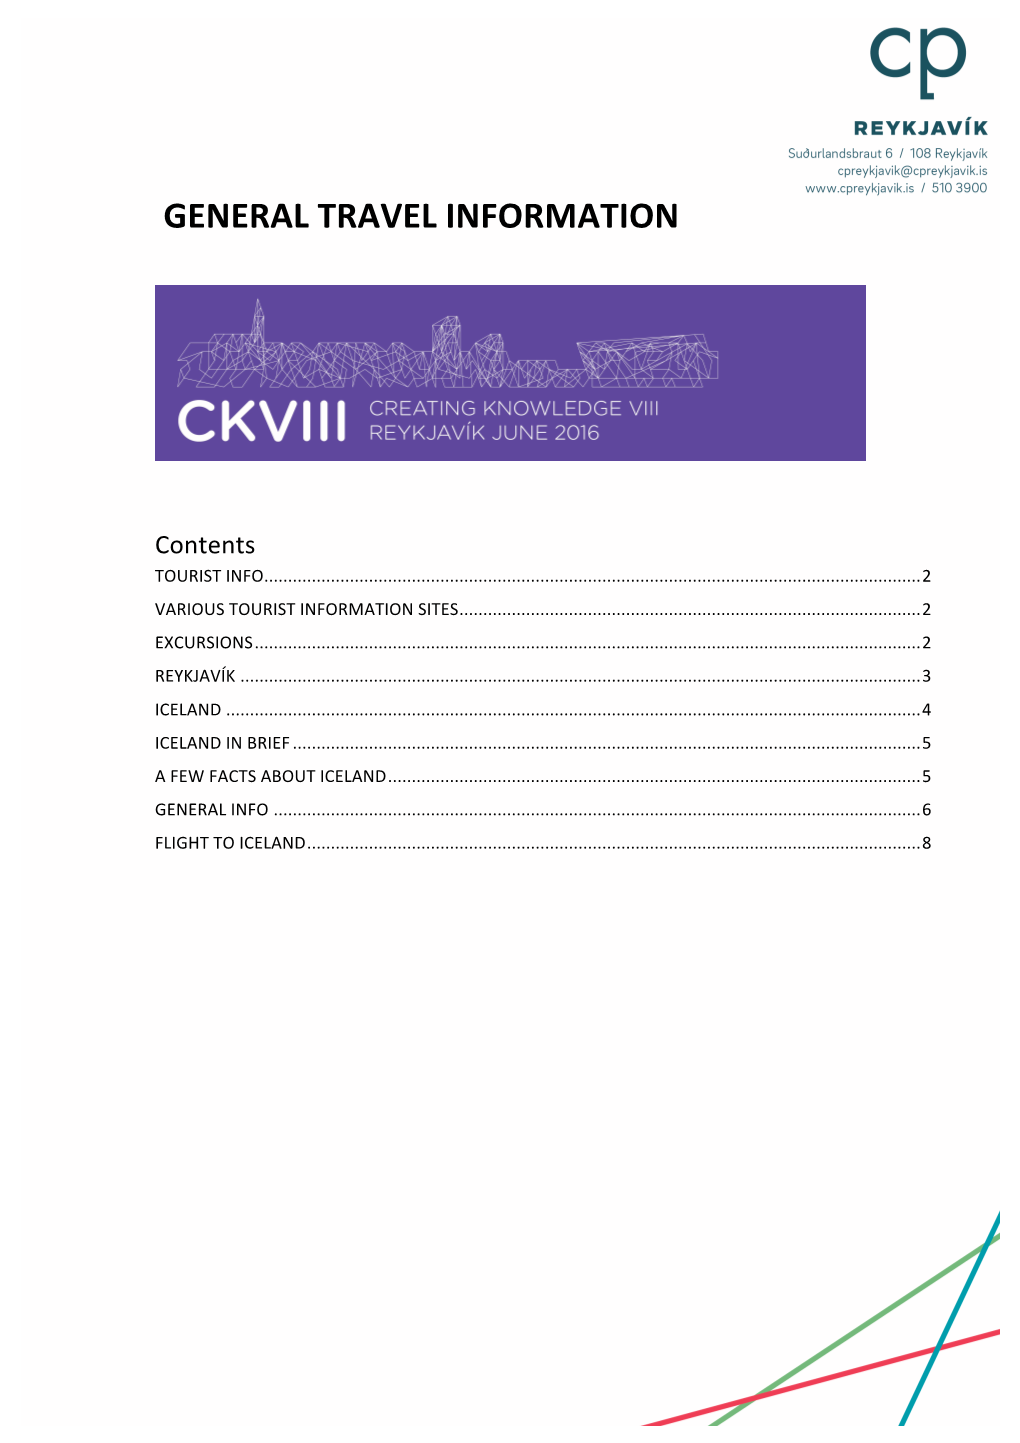 General Travel Information